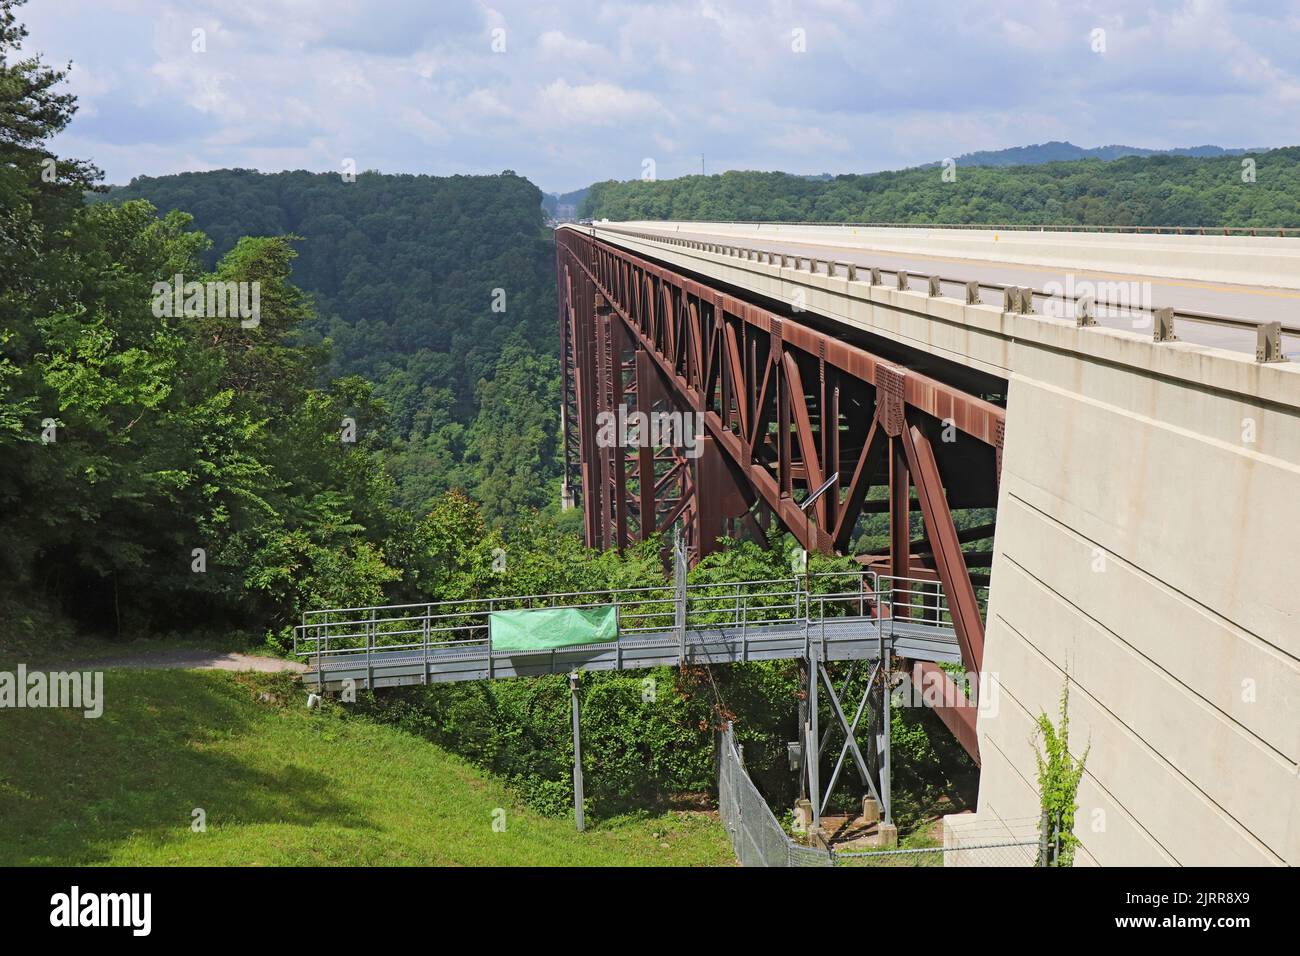 Vista del puente New River Gorge en la ruta US 19 cerca de Fayetteville, Virginia Occidental Foto de stock